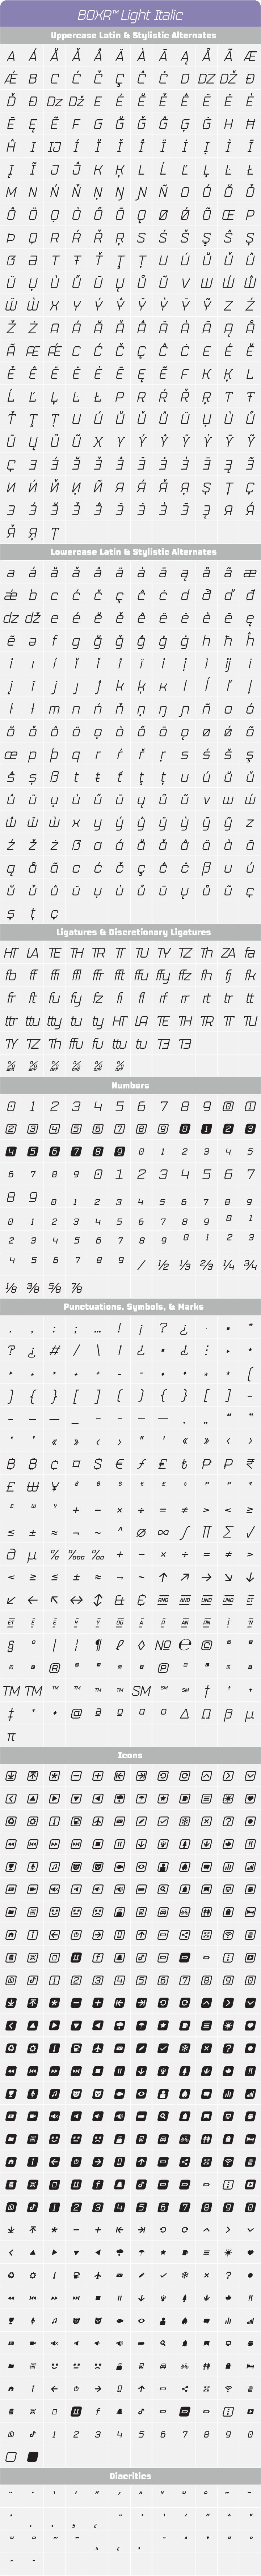 Boxr-Fonts-Light-Italic-Glyph-Tables.png